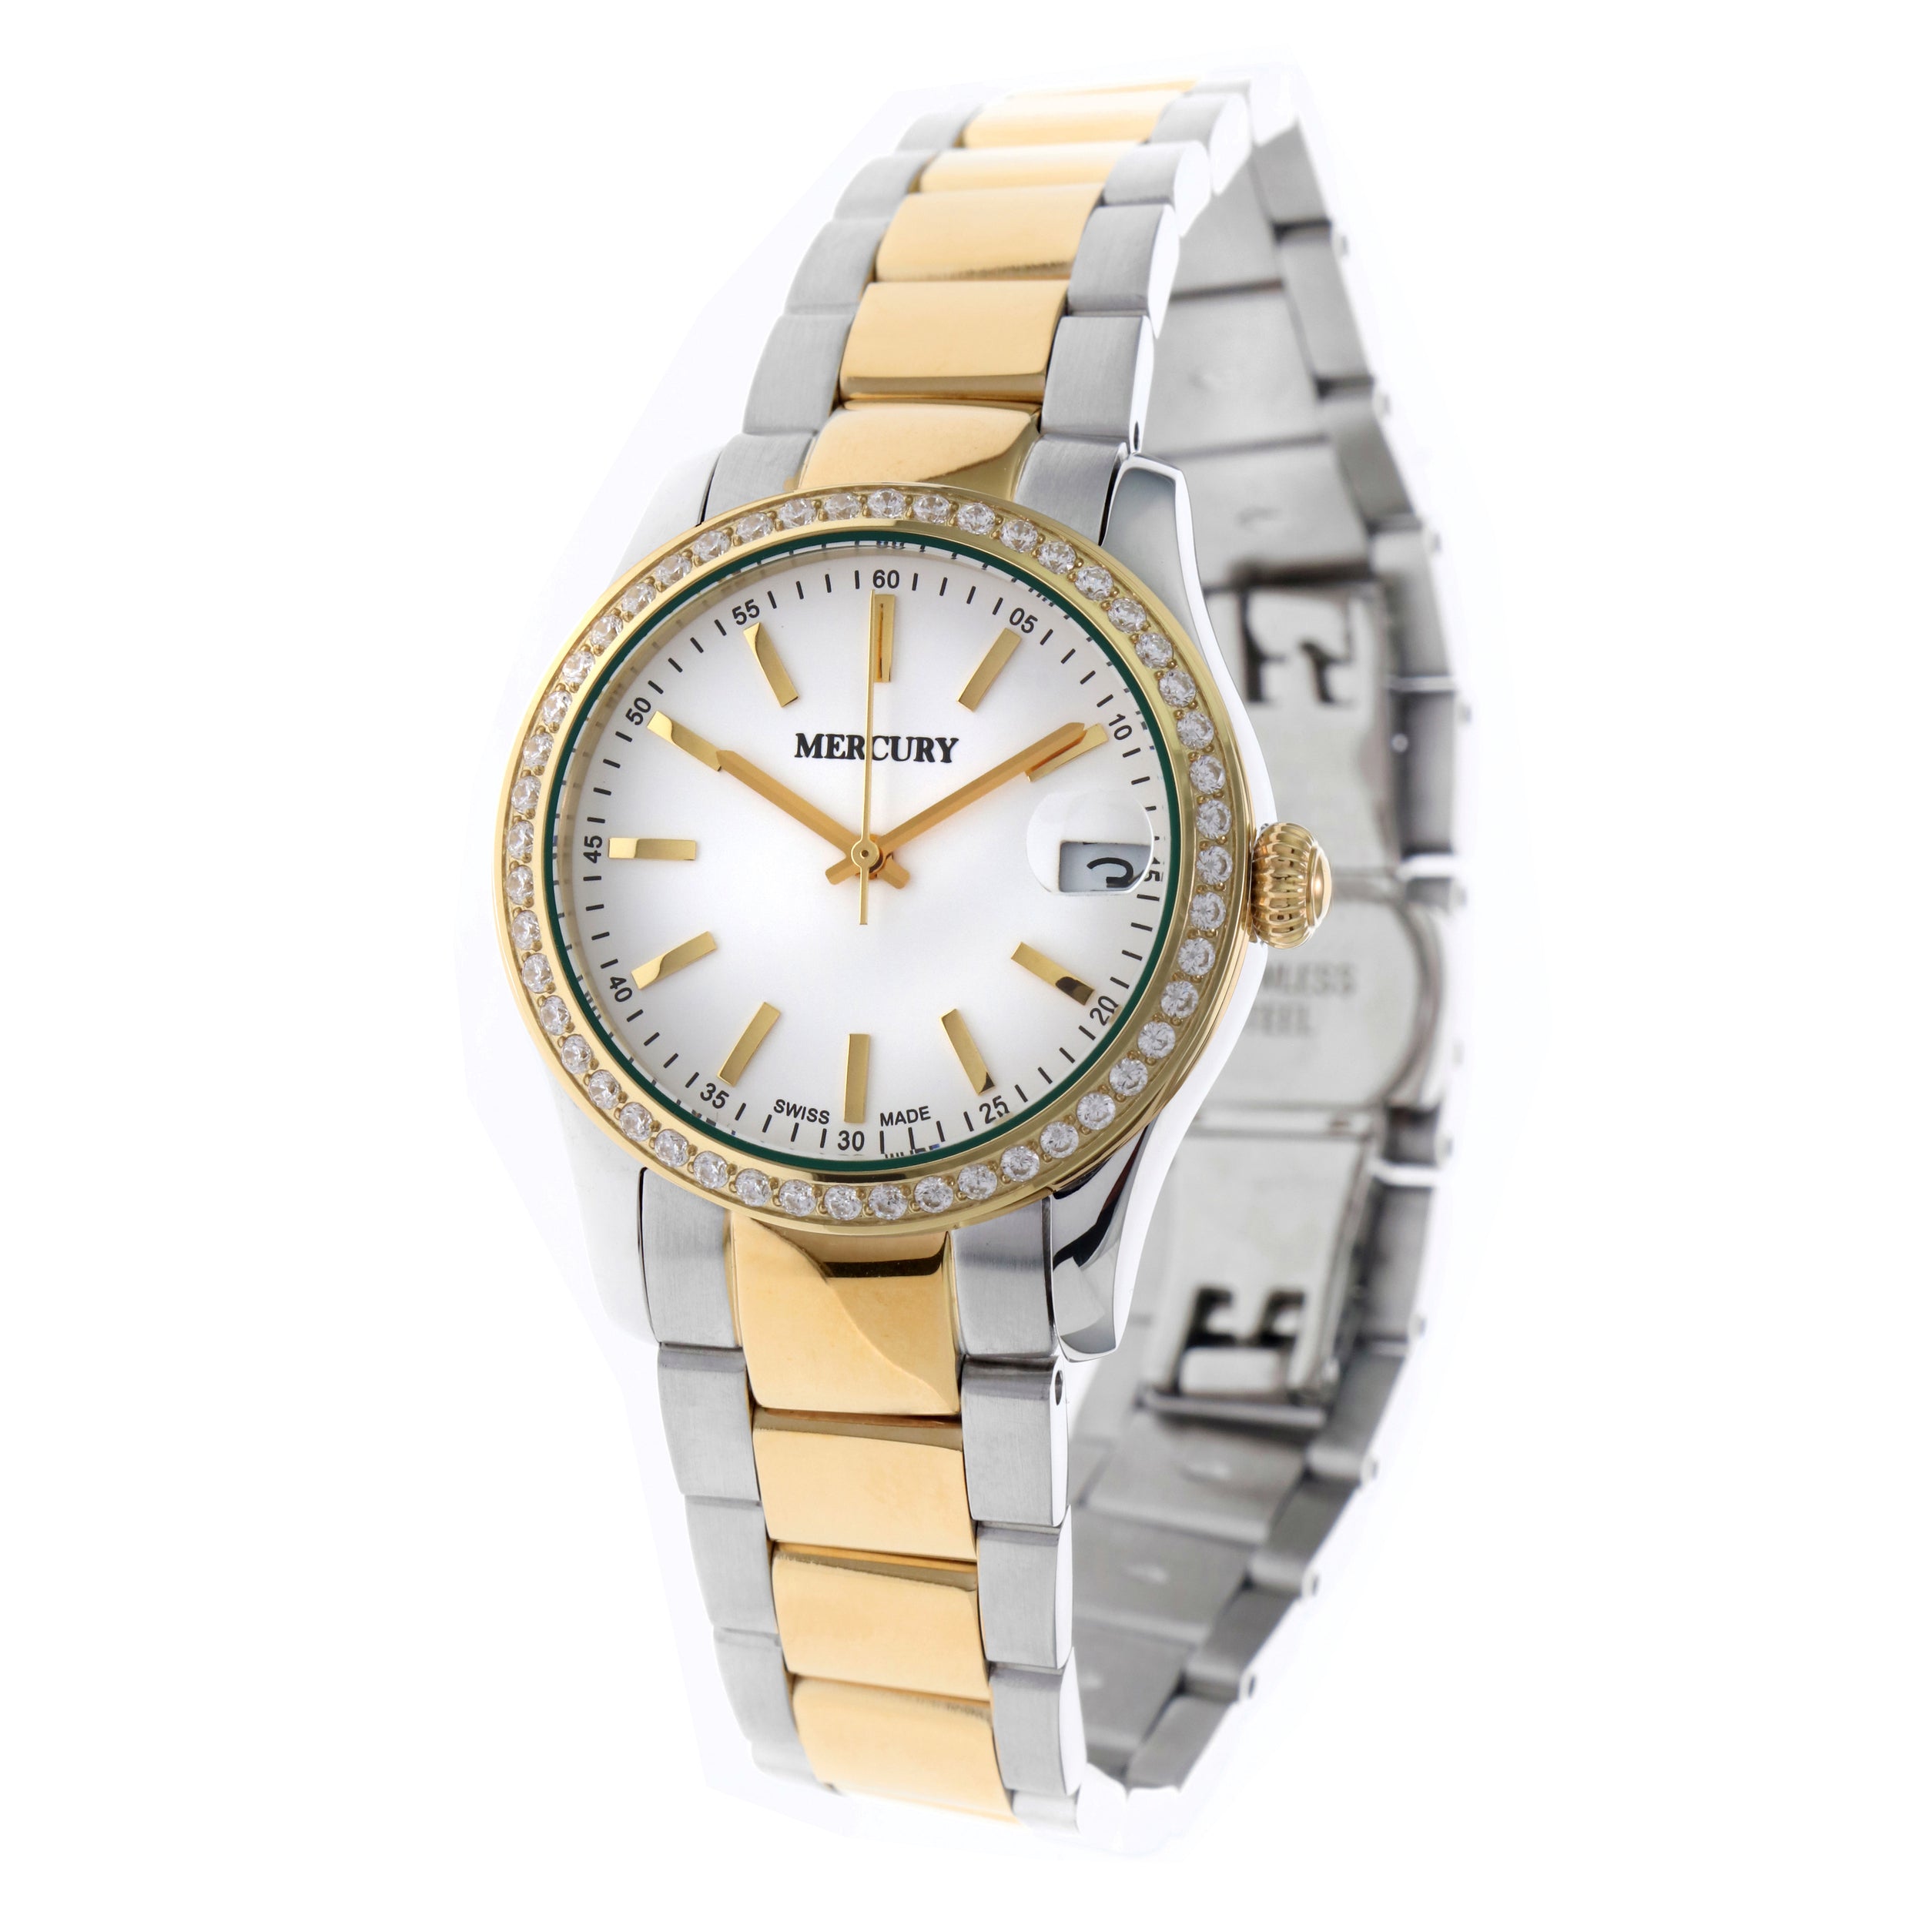 Mercury Women's Swiss Quartz Watch with White Dial - MER-0032